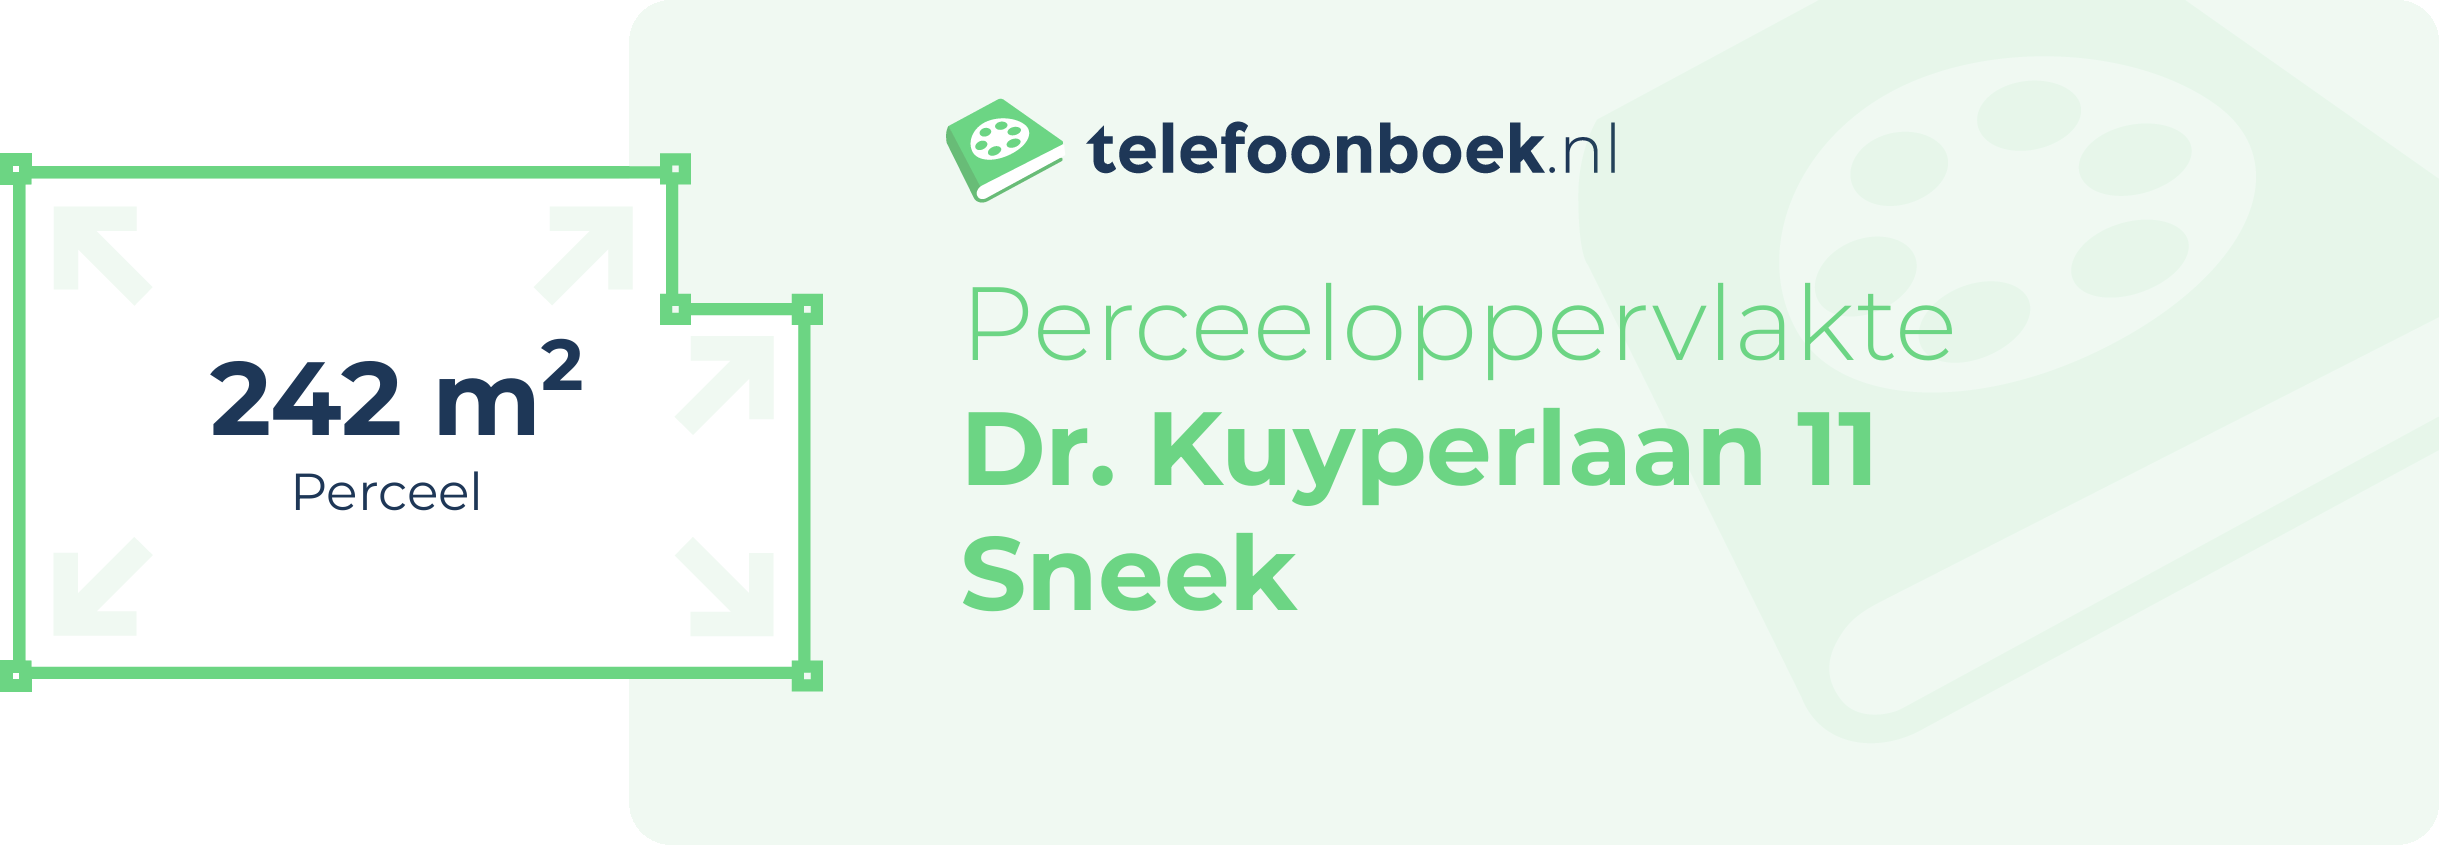 Perceeloppervlakte Dr. Kuyperlaan 11 Sneek